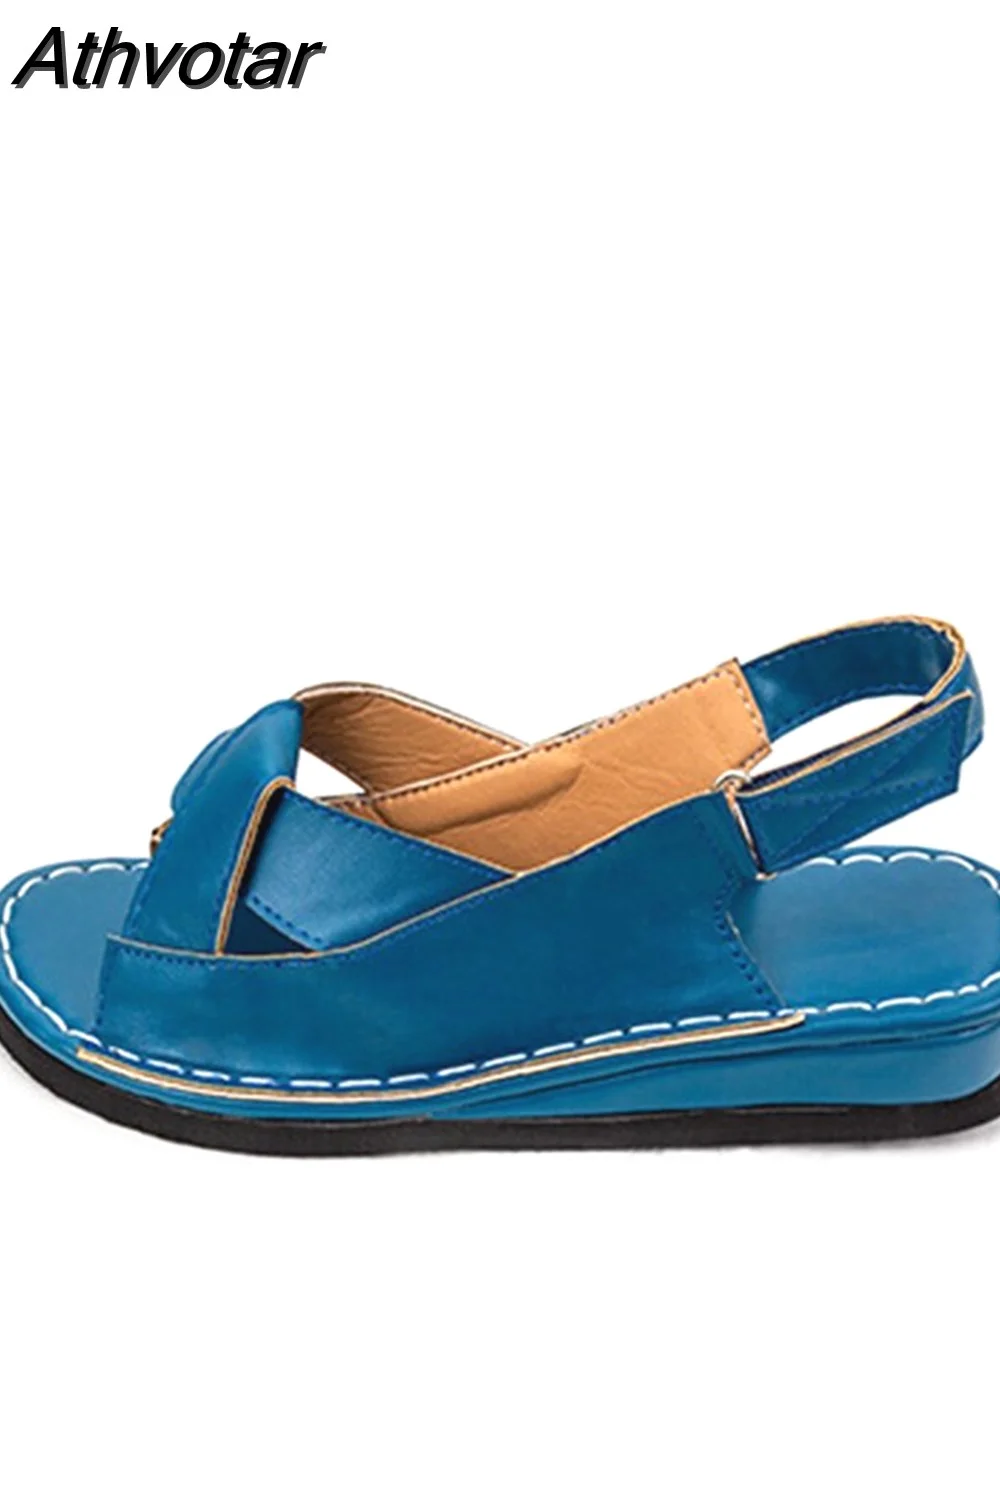 Athvotar Sandals Summer Female Shoes Women's Peep Toe Wedge Woman Comfortable Plus Size Female Platform Ladies New 2023 601-1